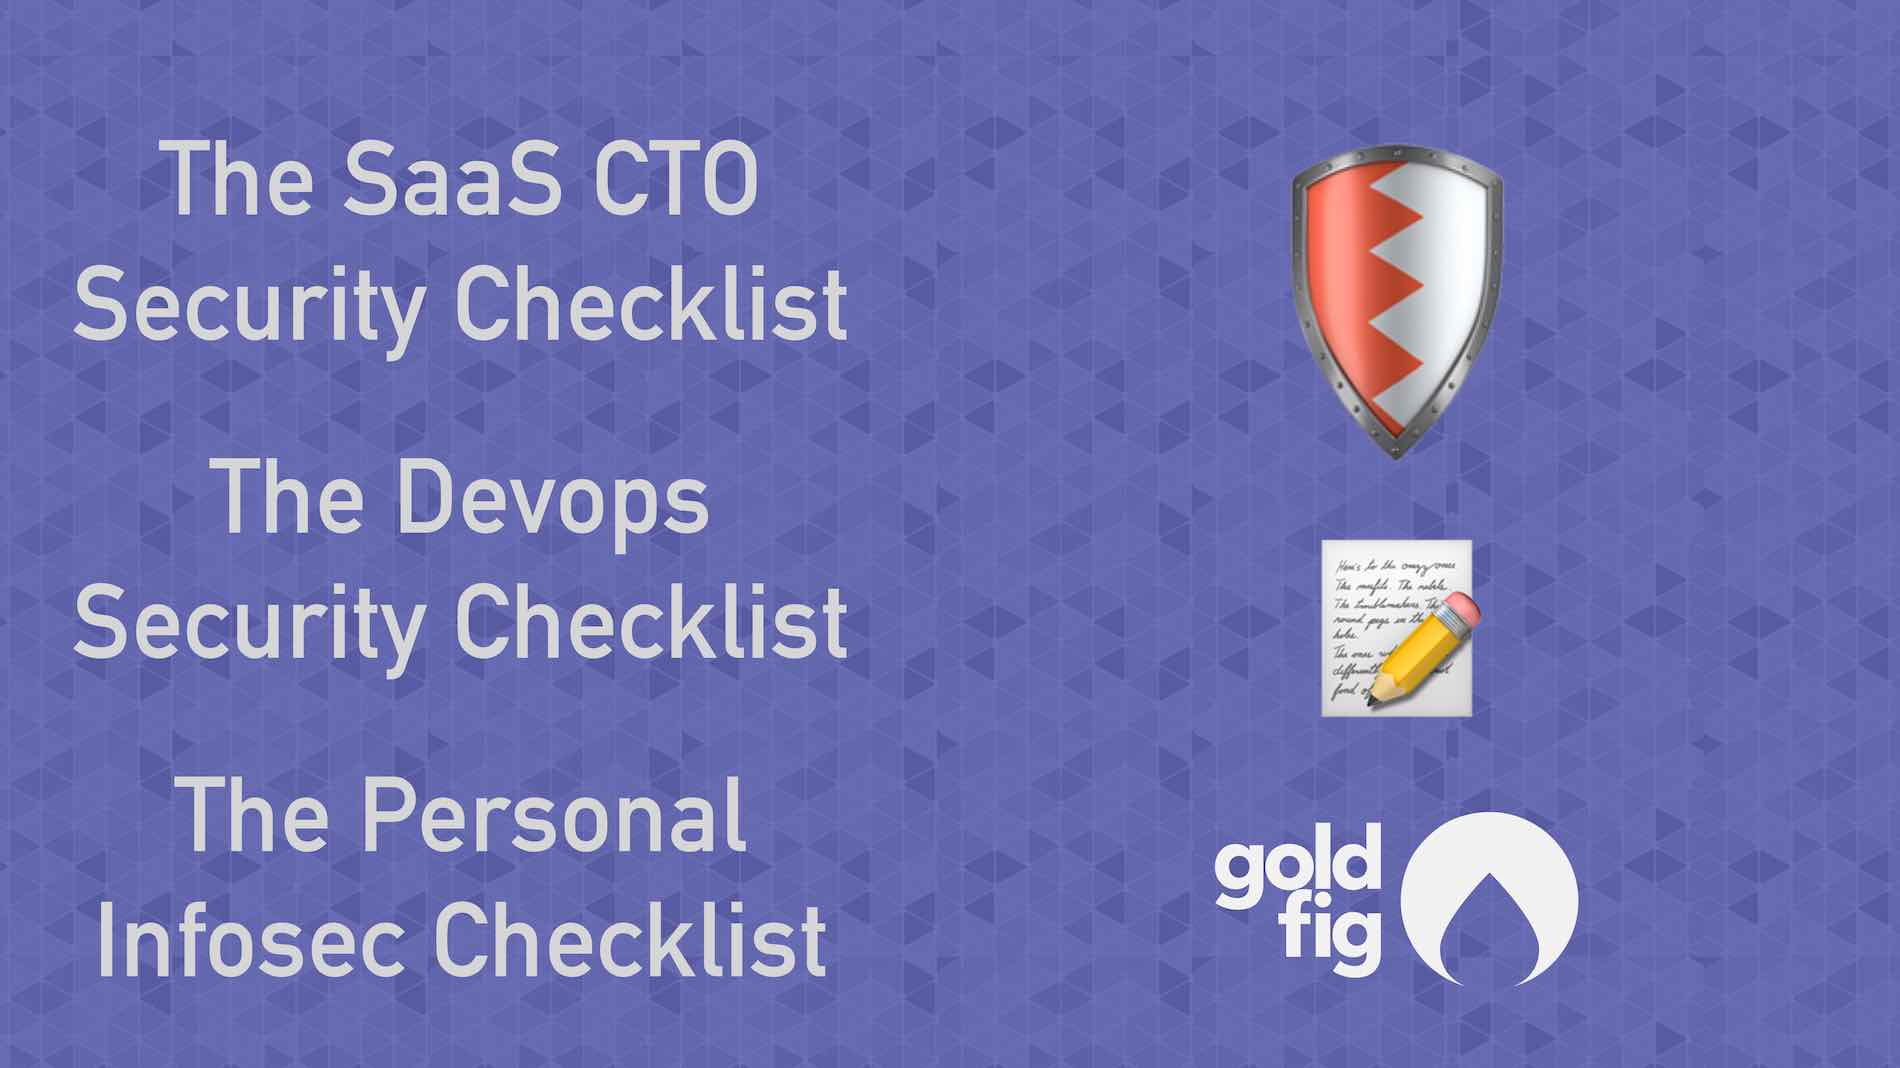 Infosec checklists